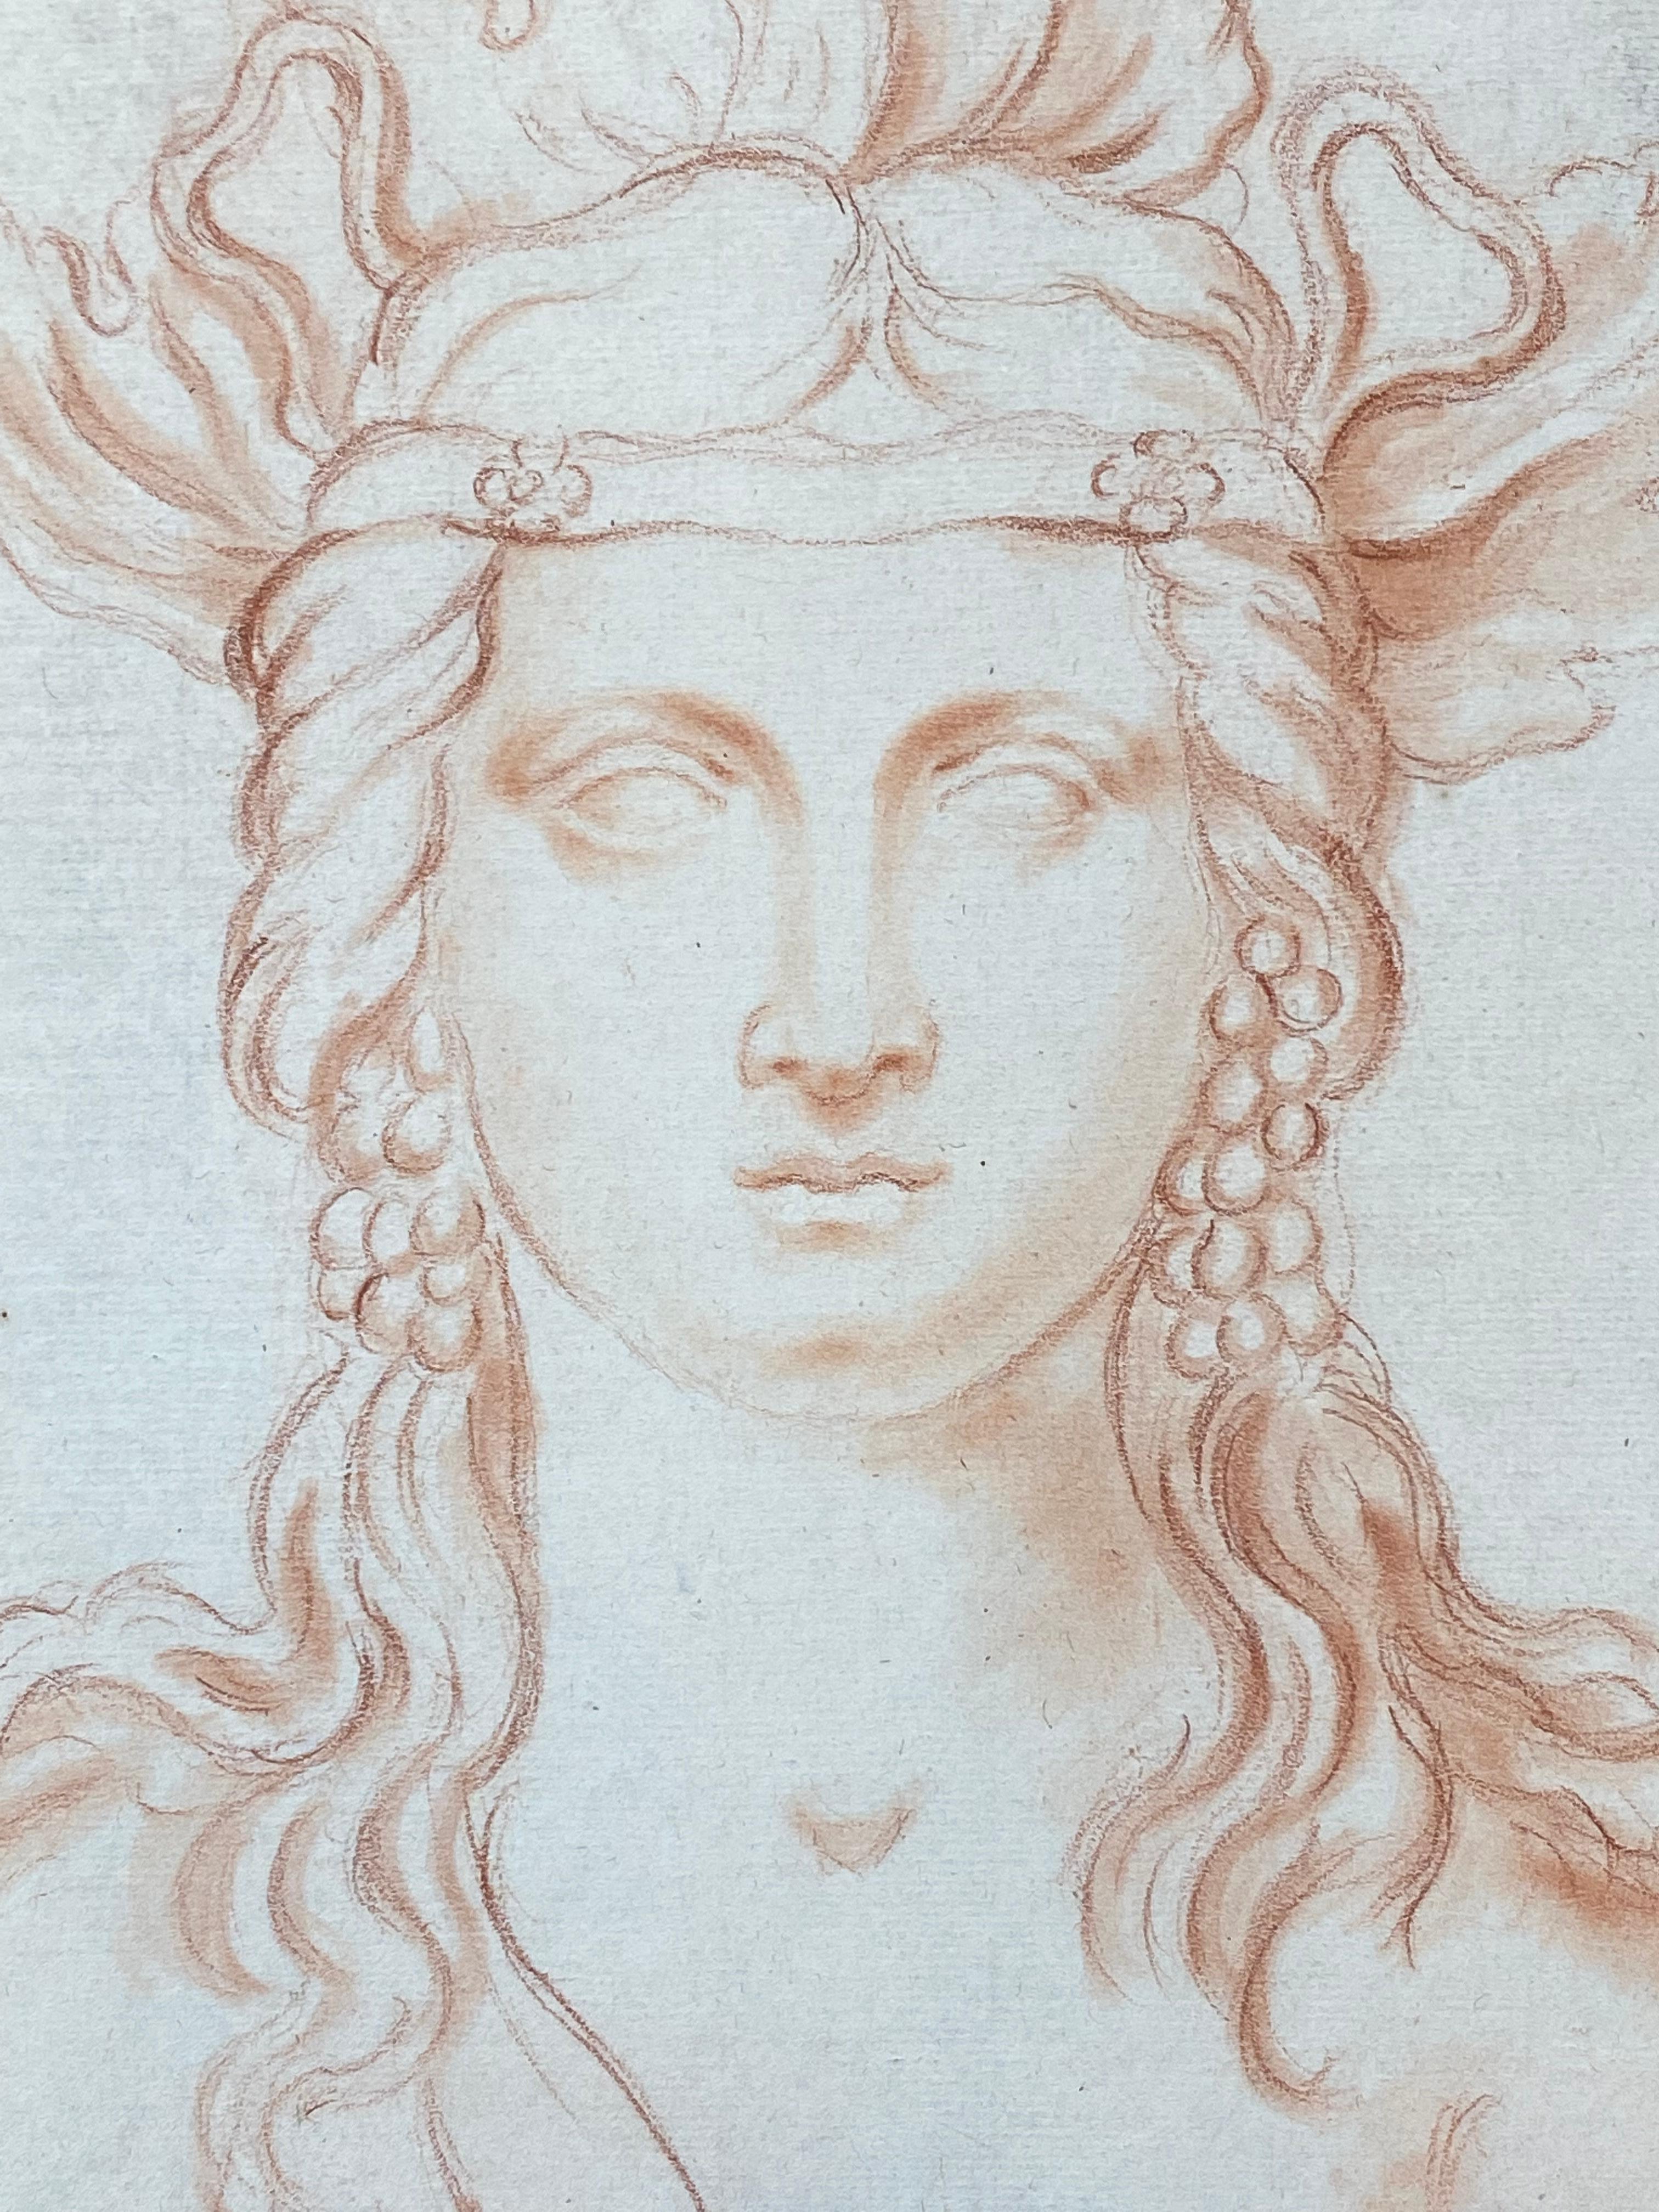 1800's Italian Sanguine Chalk Drawing Mythological Portrait Nude Bacchus Lady - Painting by Italian Old Master